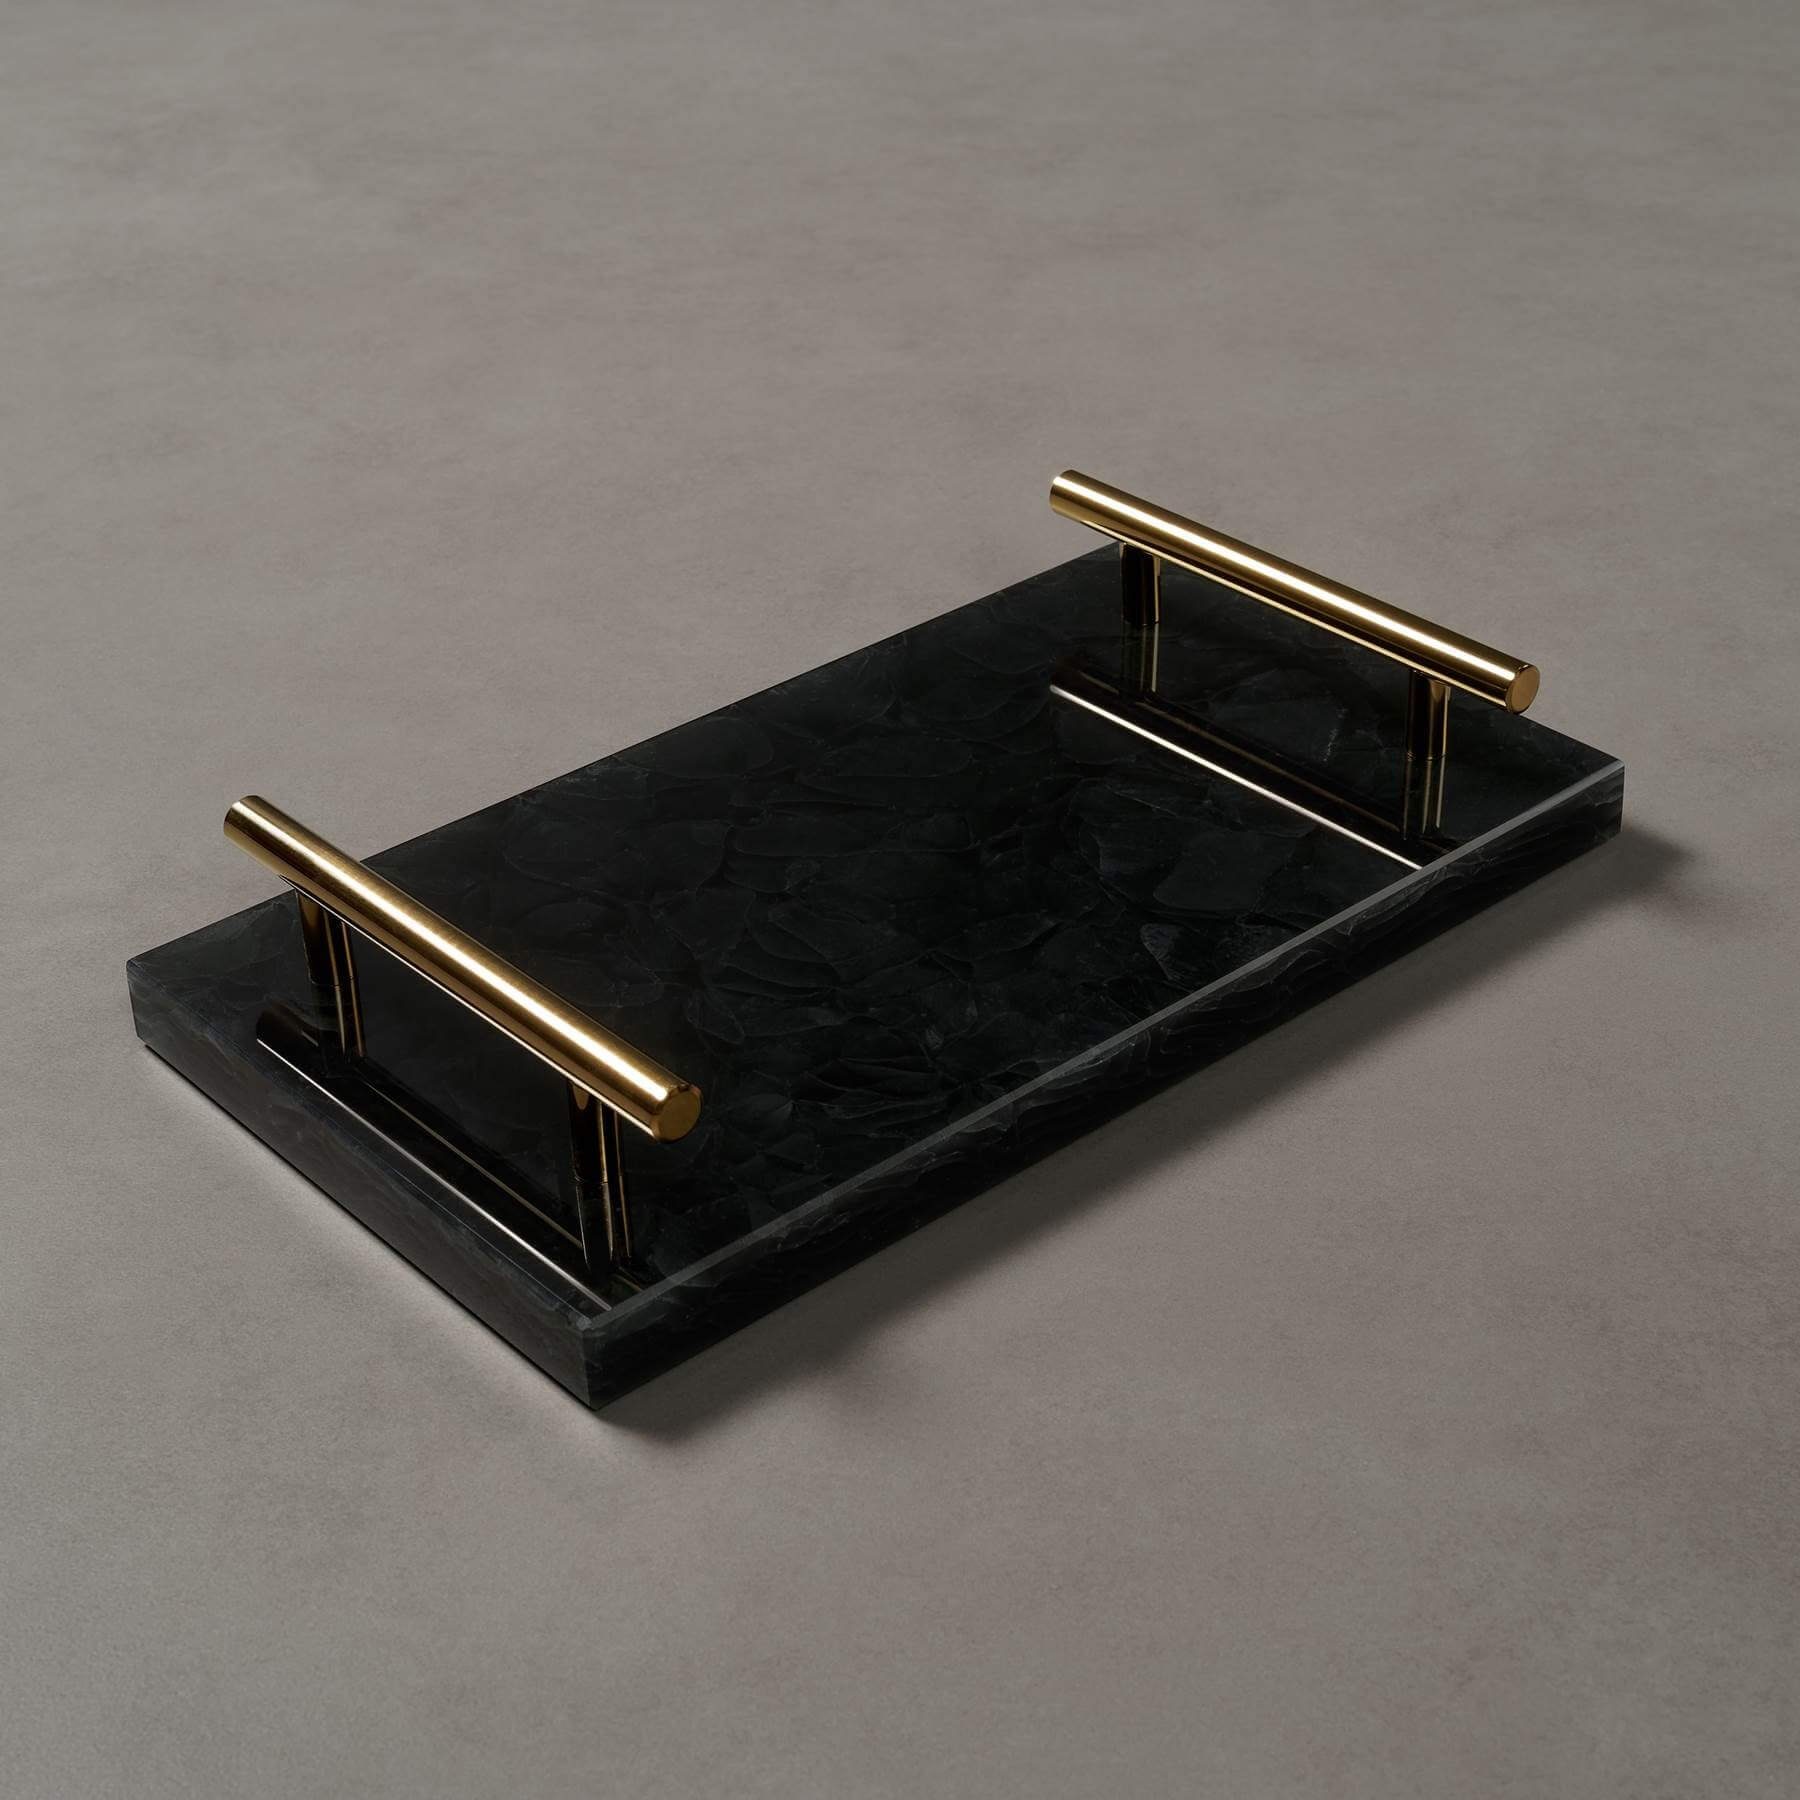 MAGNA Atelier Dekotablett NOTTING HILL mit GLASKERAMIK, Tablet, silber gold Metallgestell, 30x17x5cm Pearl Black